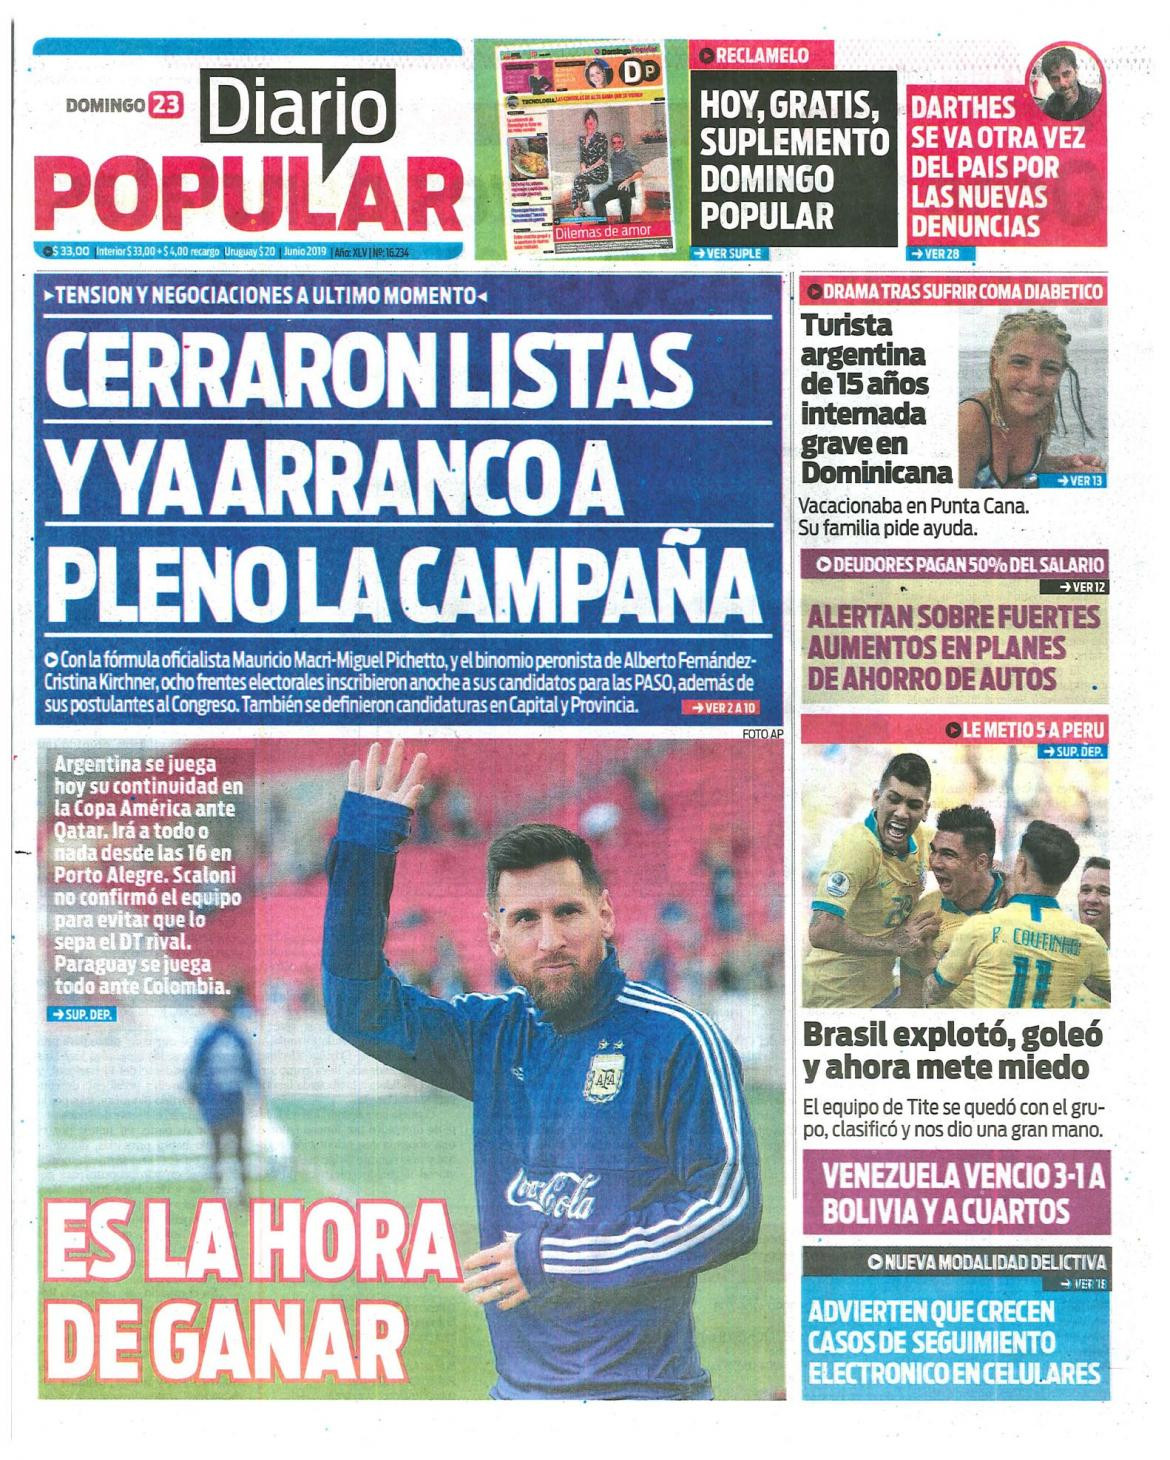 Tapas de Diarios - Popular - Domingo 23-6-19